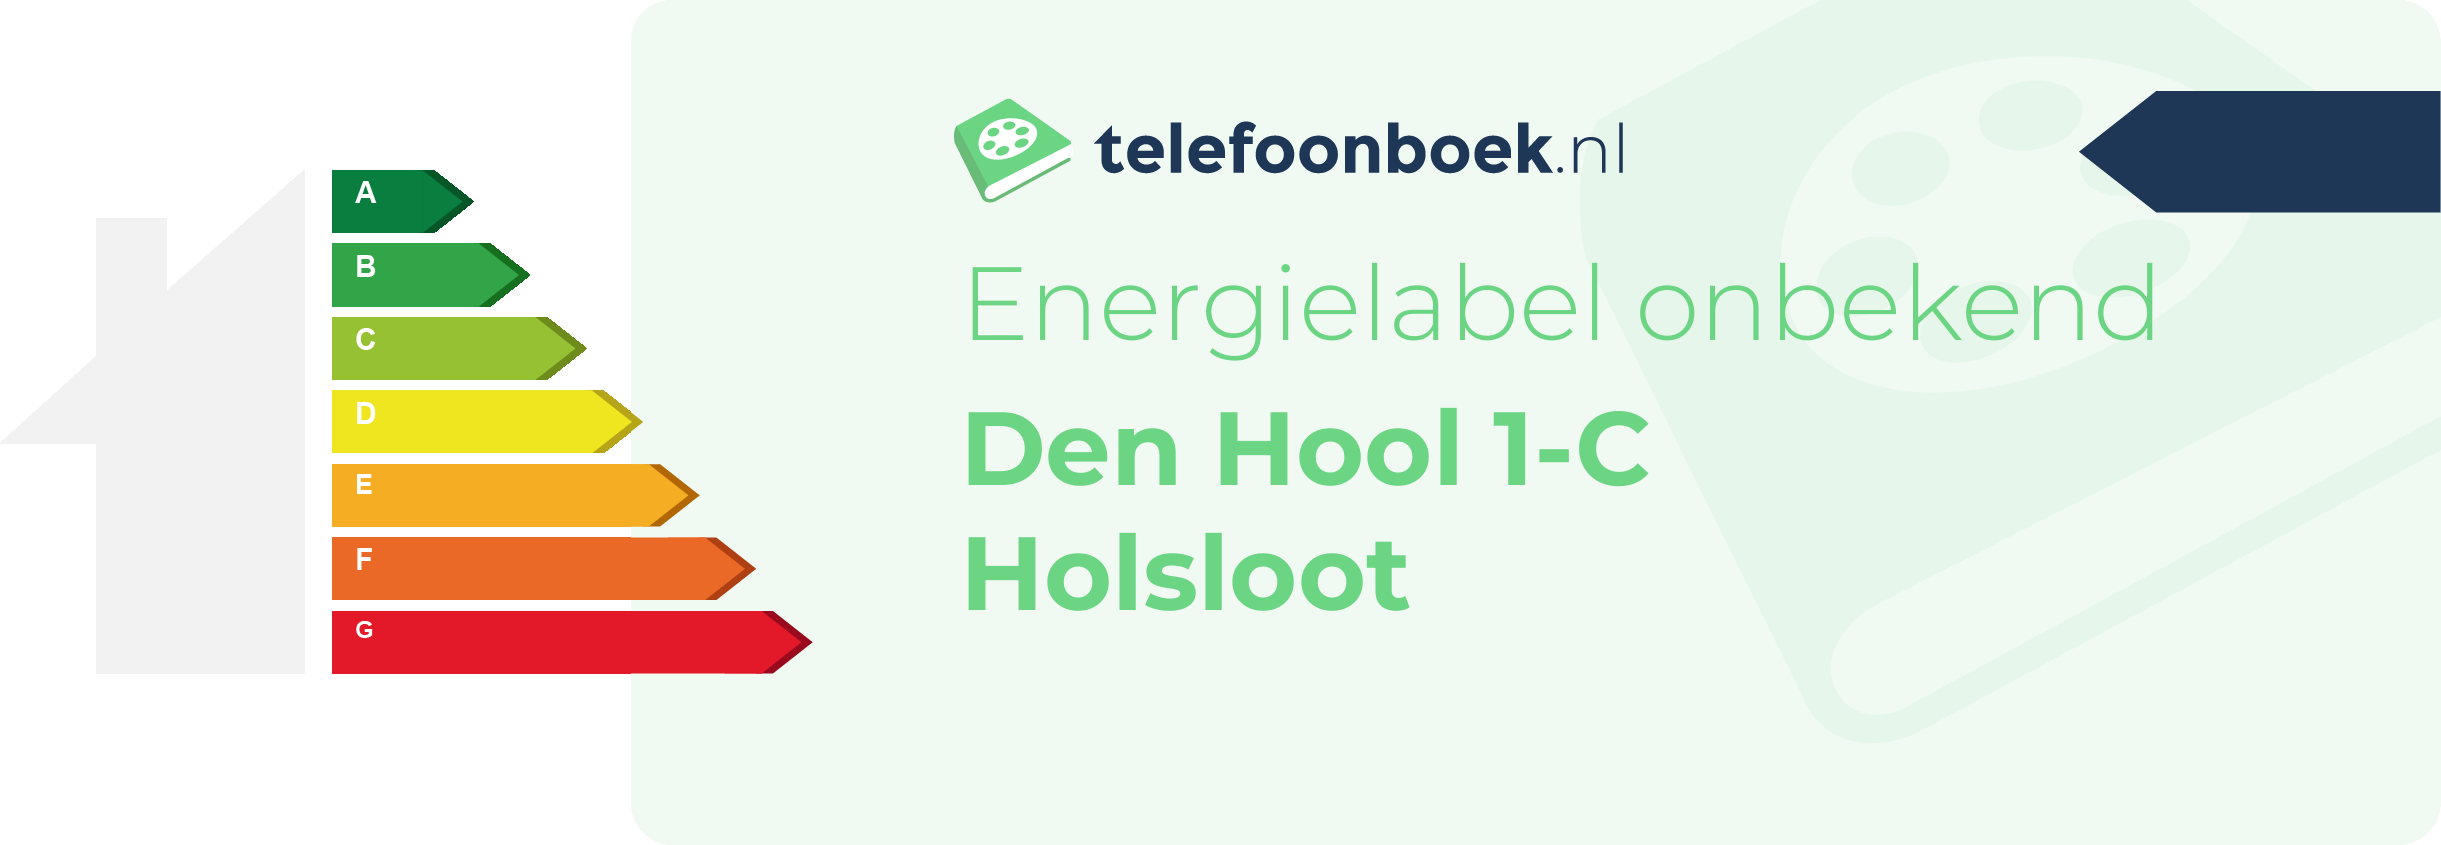 Energielabel Den Hool 1-C Holsloot